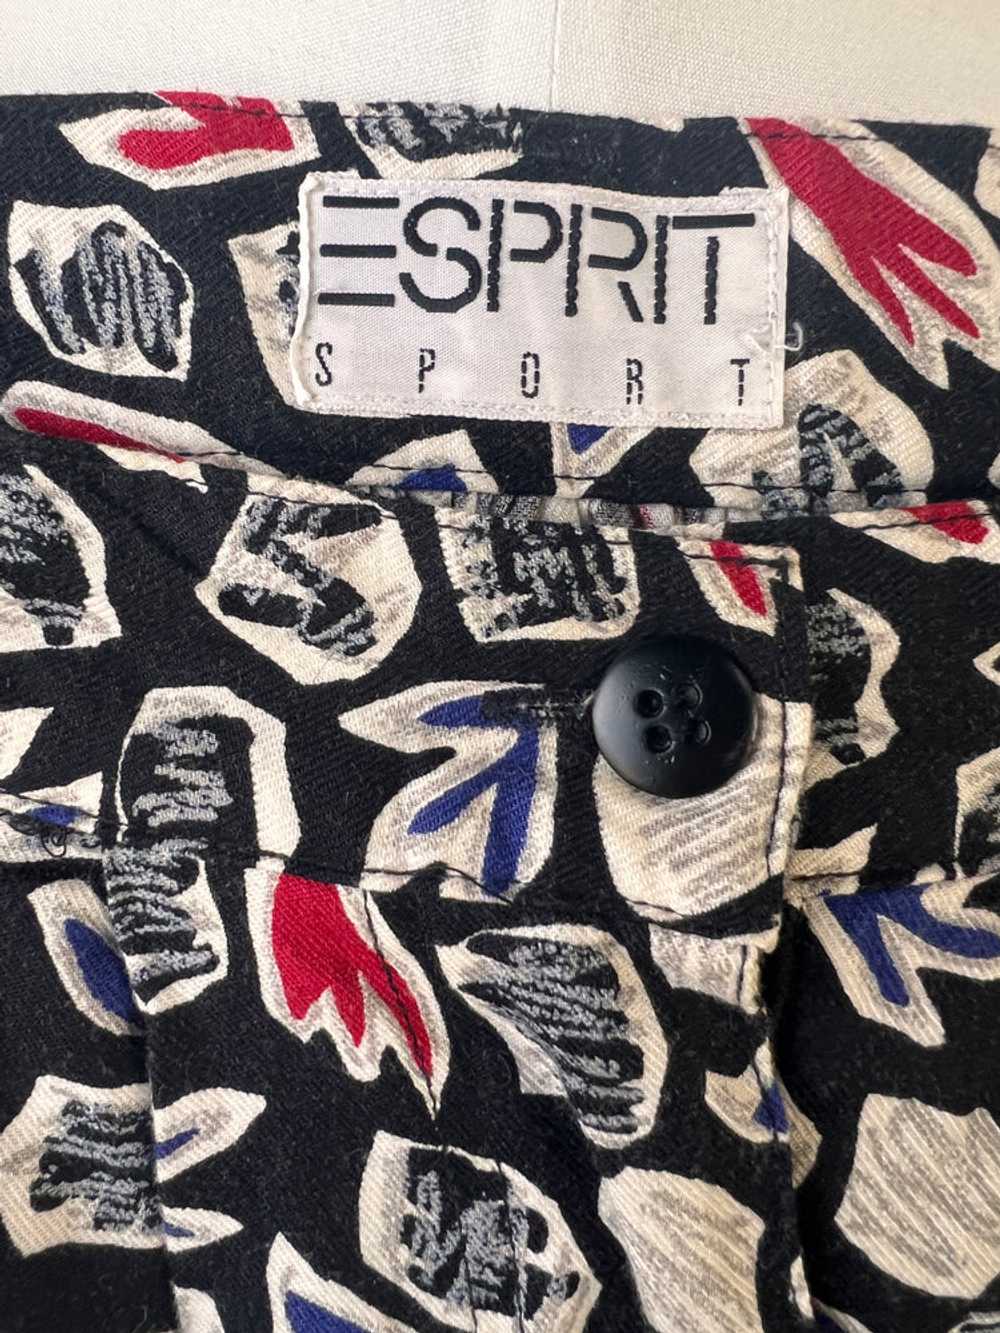 Esprit Skirt - image 5